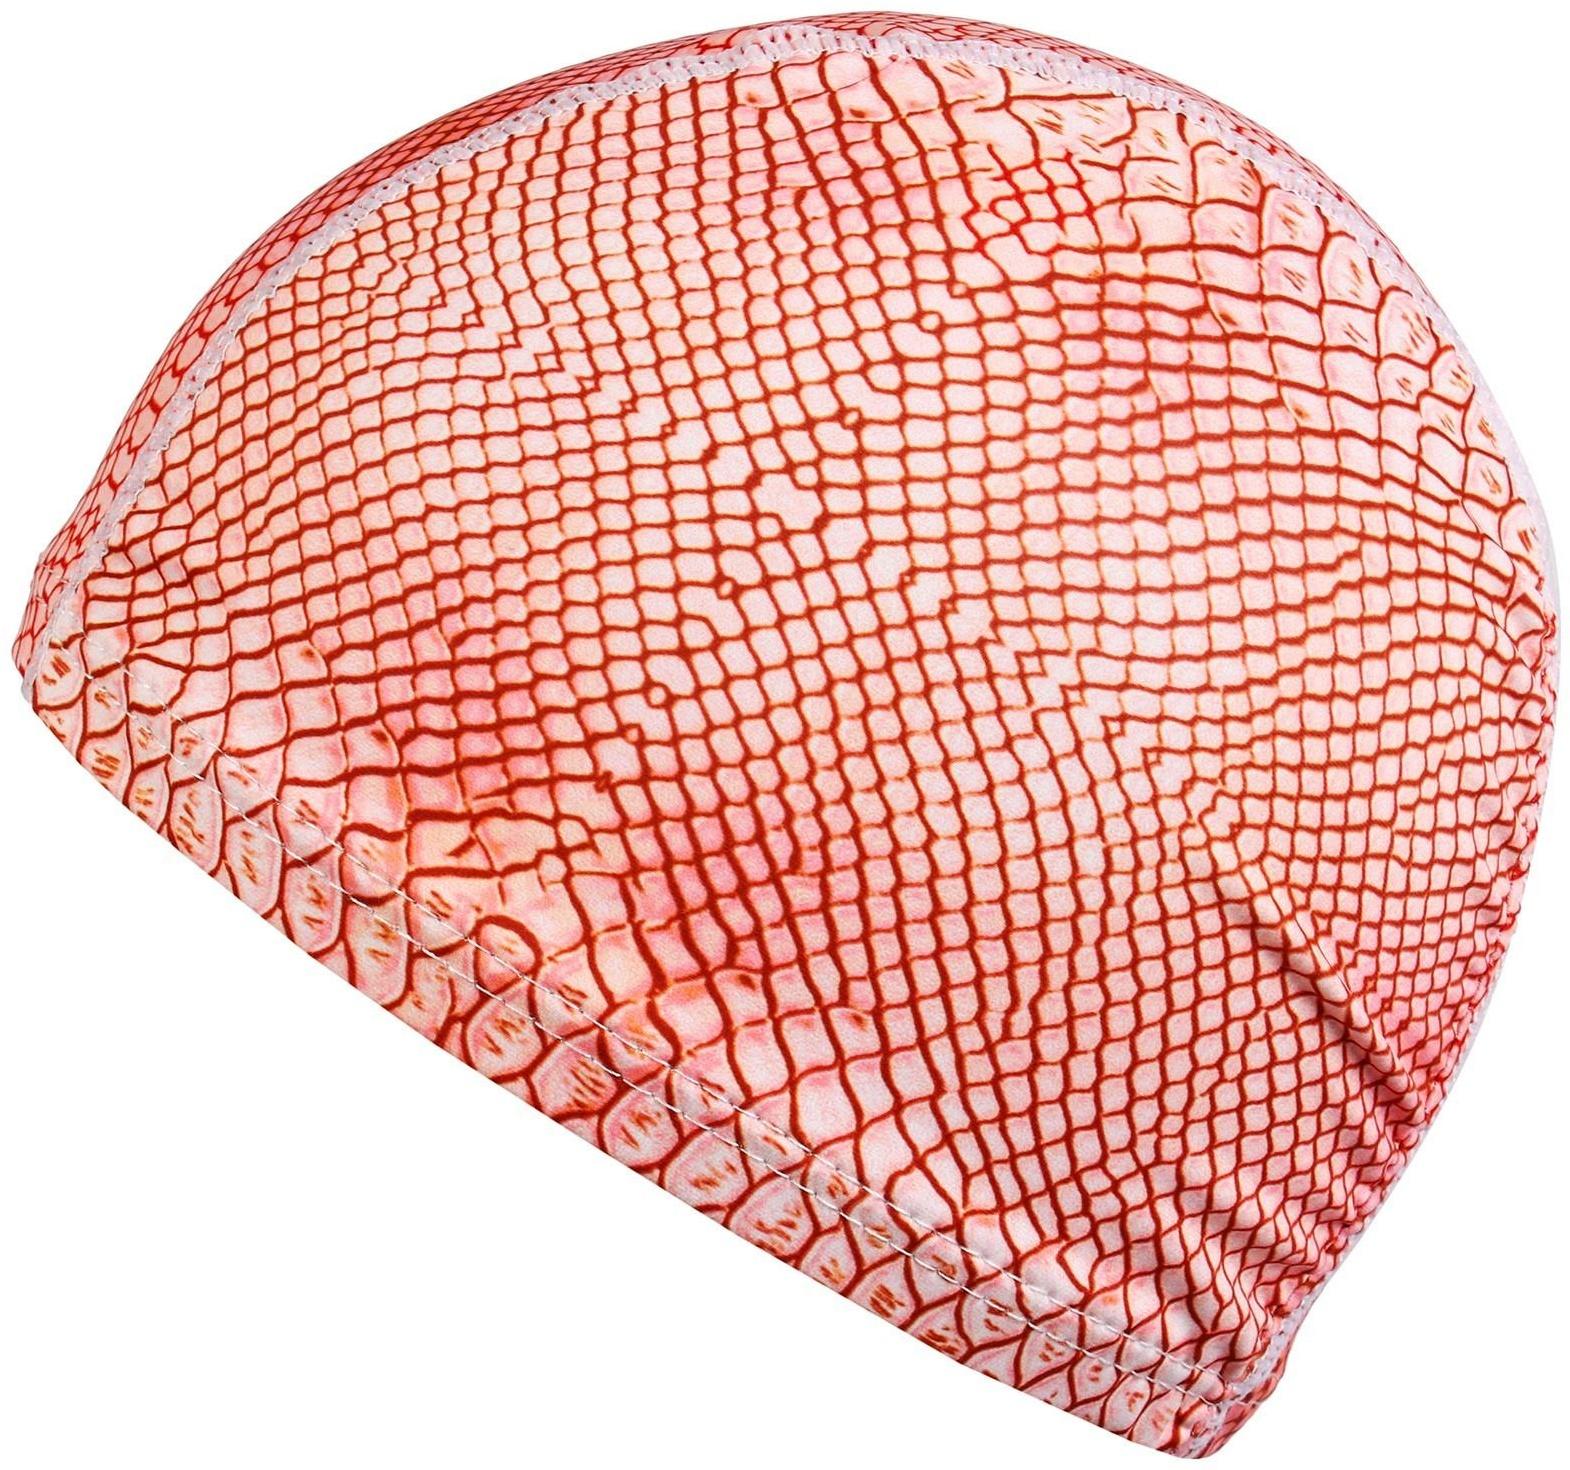 Шапочка для плавания взрослая, тканевая, обхват 40 см, цвета микс